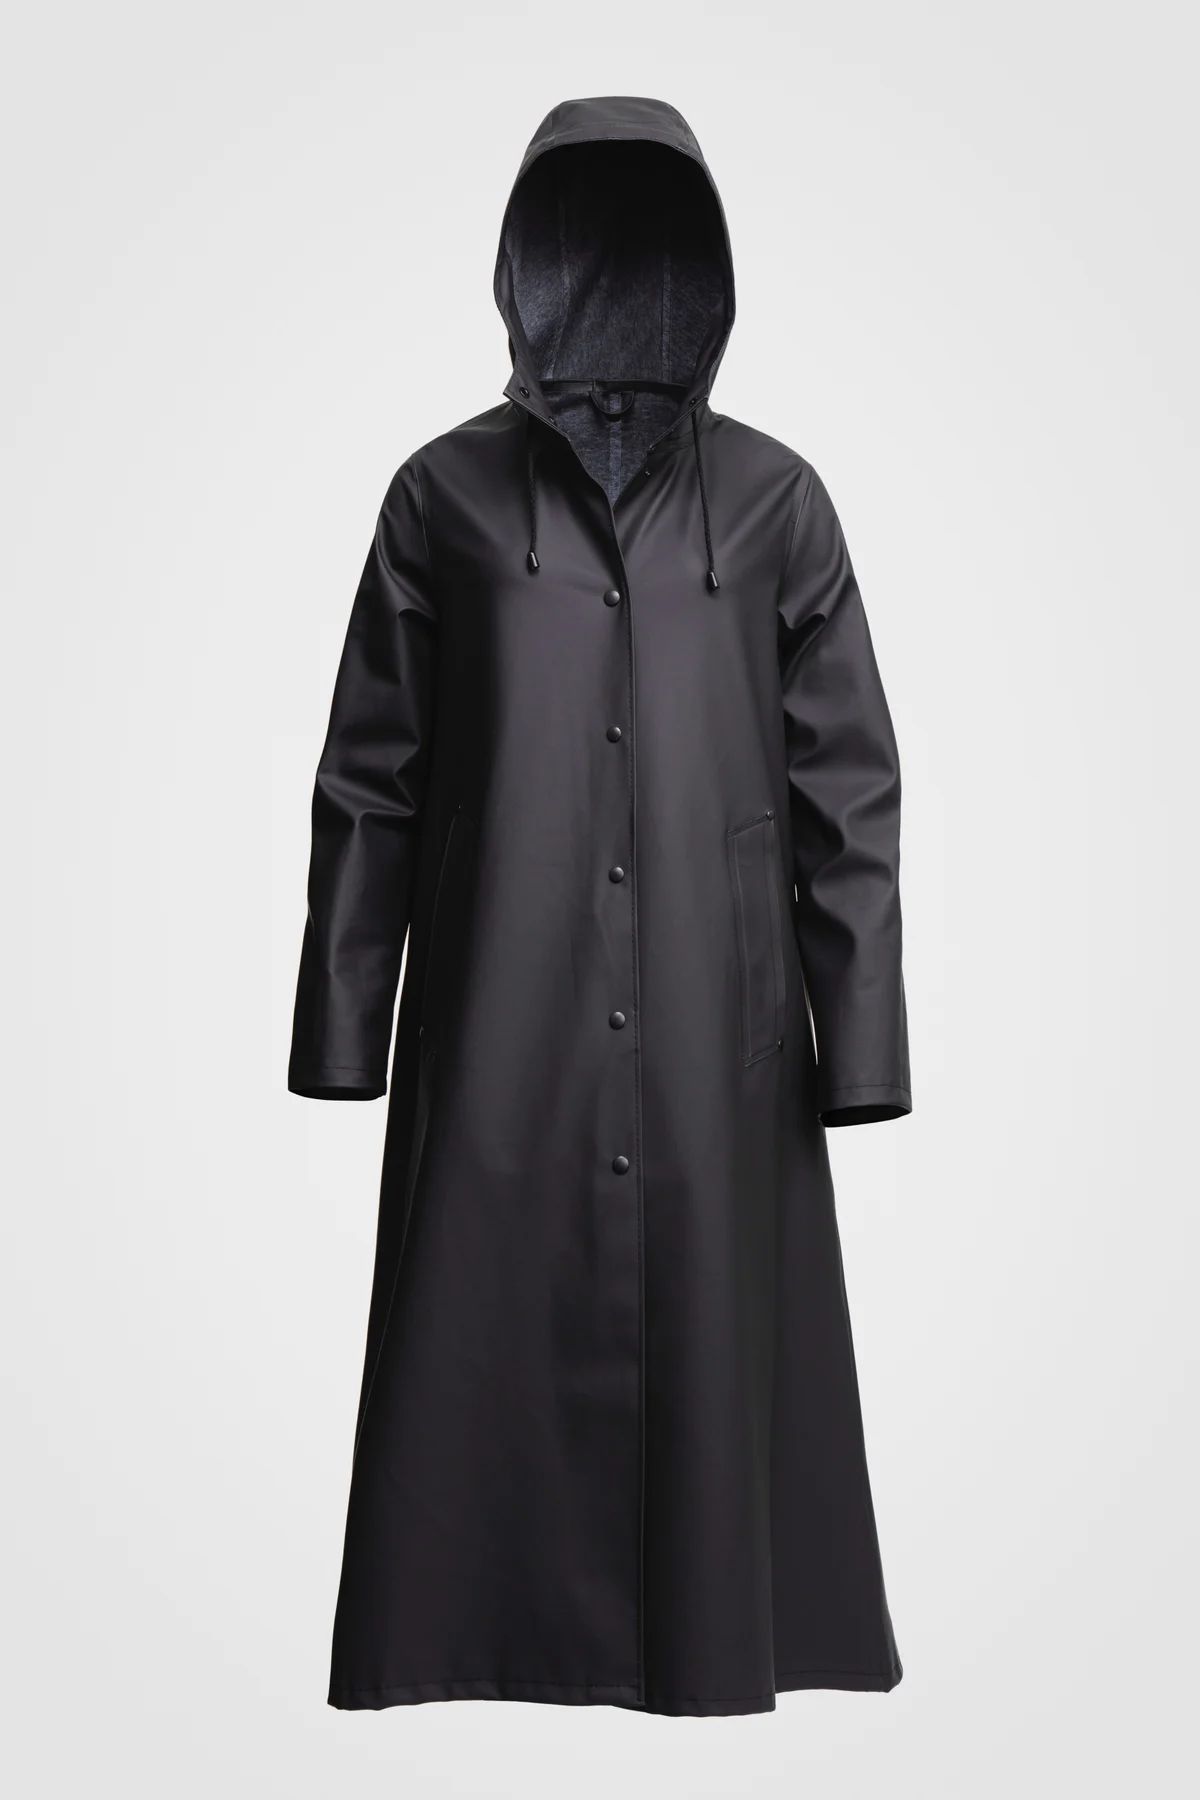 Mosebacke Long Raincoat Black | STUTTERHEIM GB | Stutterheim